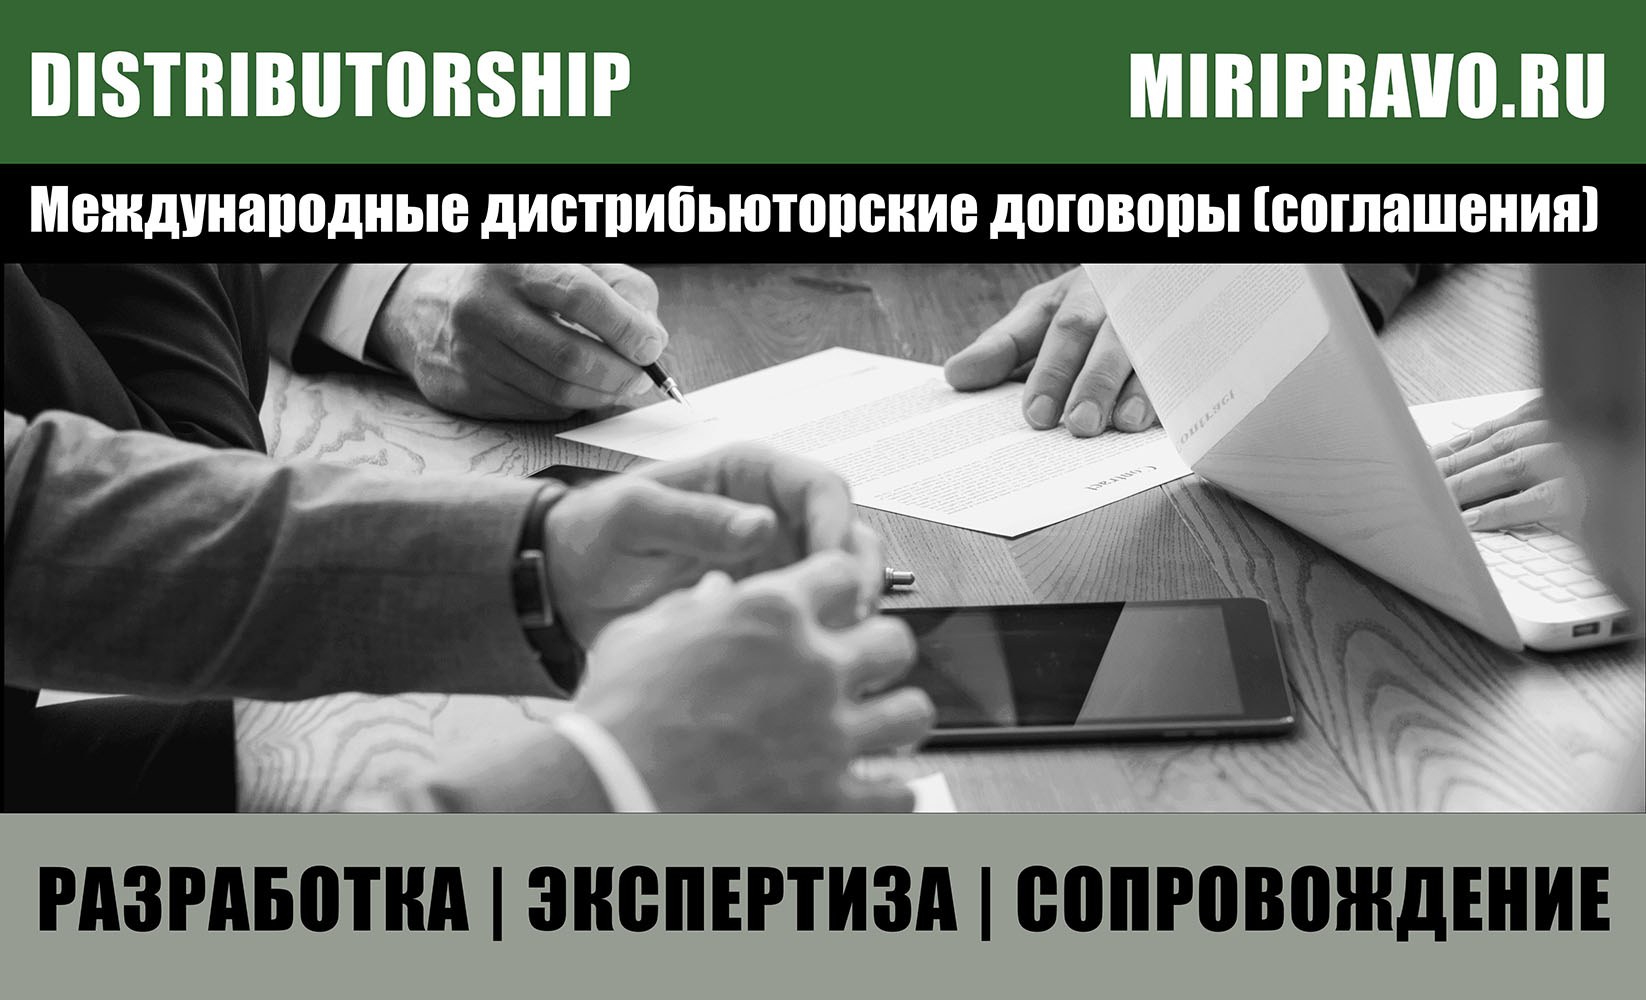 Distributorship Contract